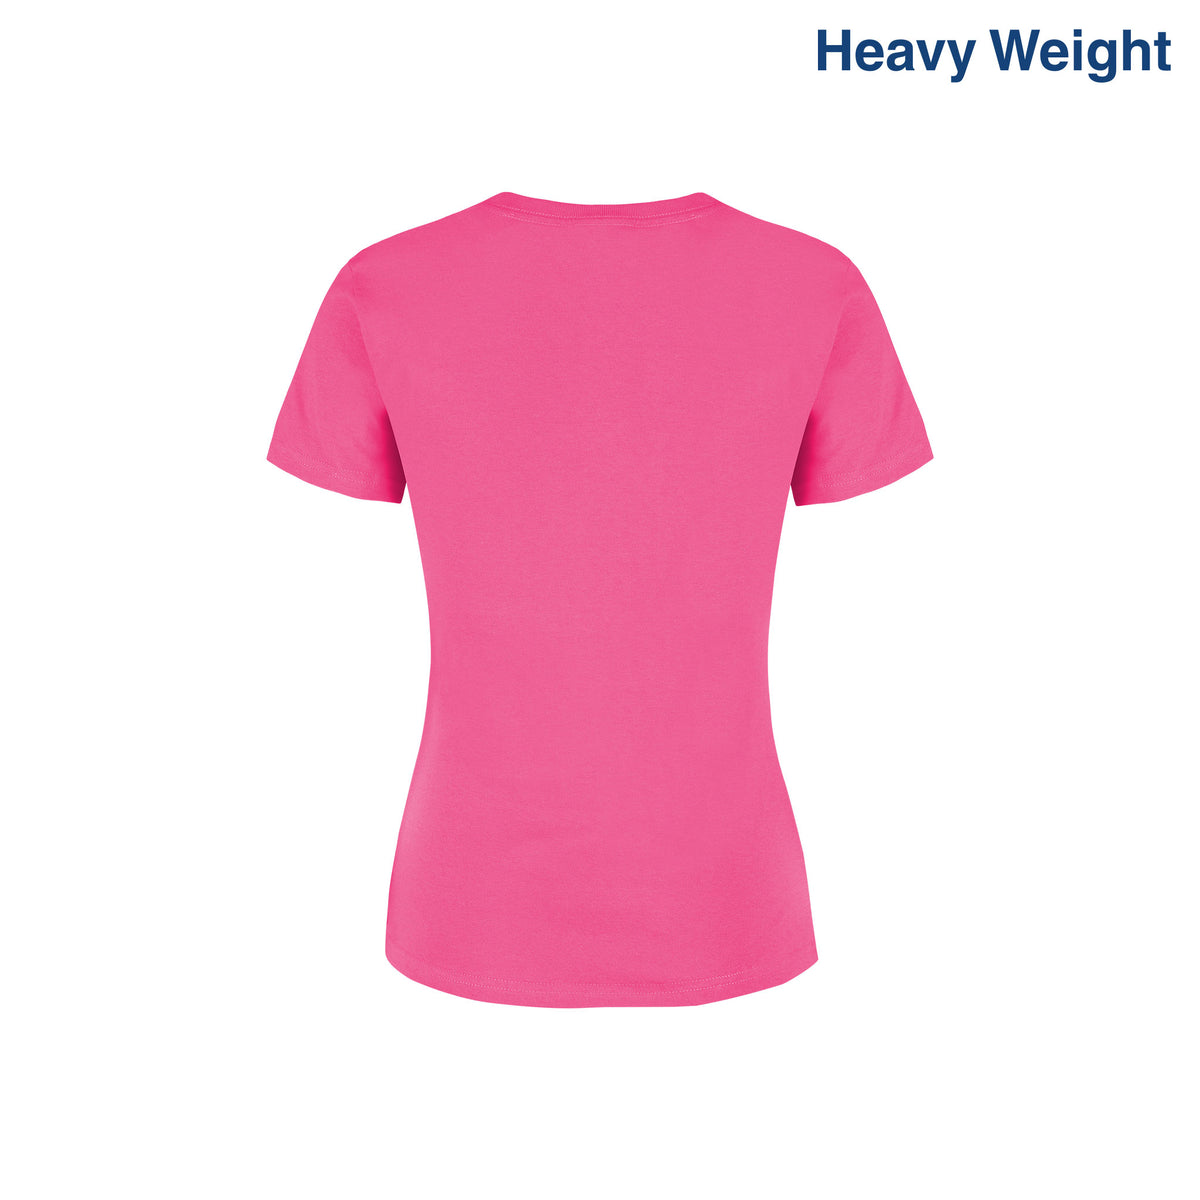 Women’s Heavy Weight Crew Neck Short Sleeve Silhouette T-Shirt (Fuchsia)